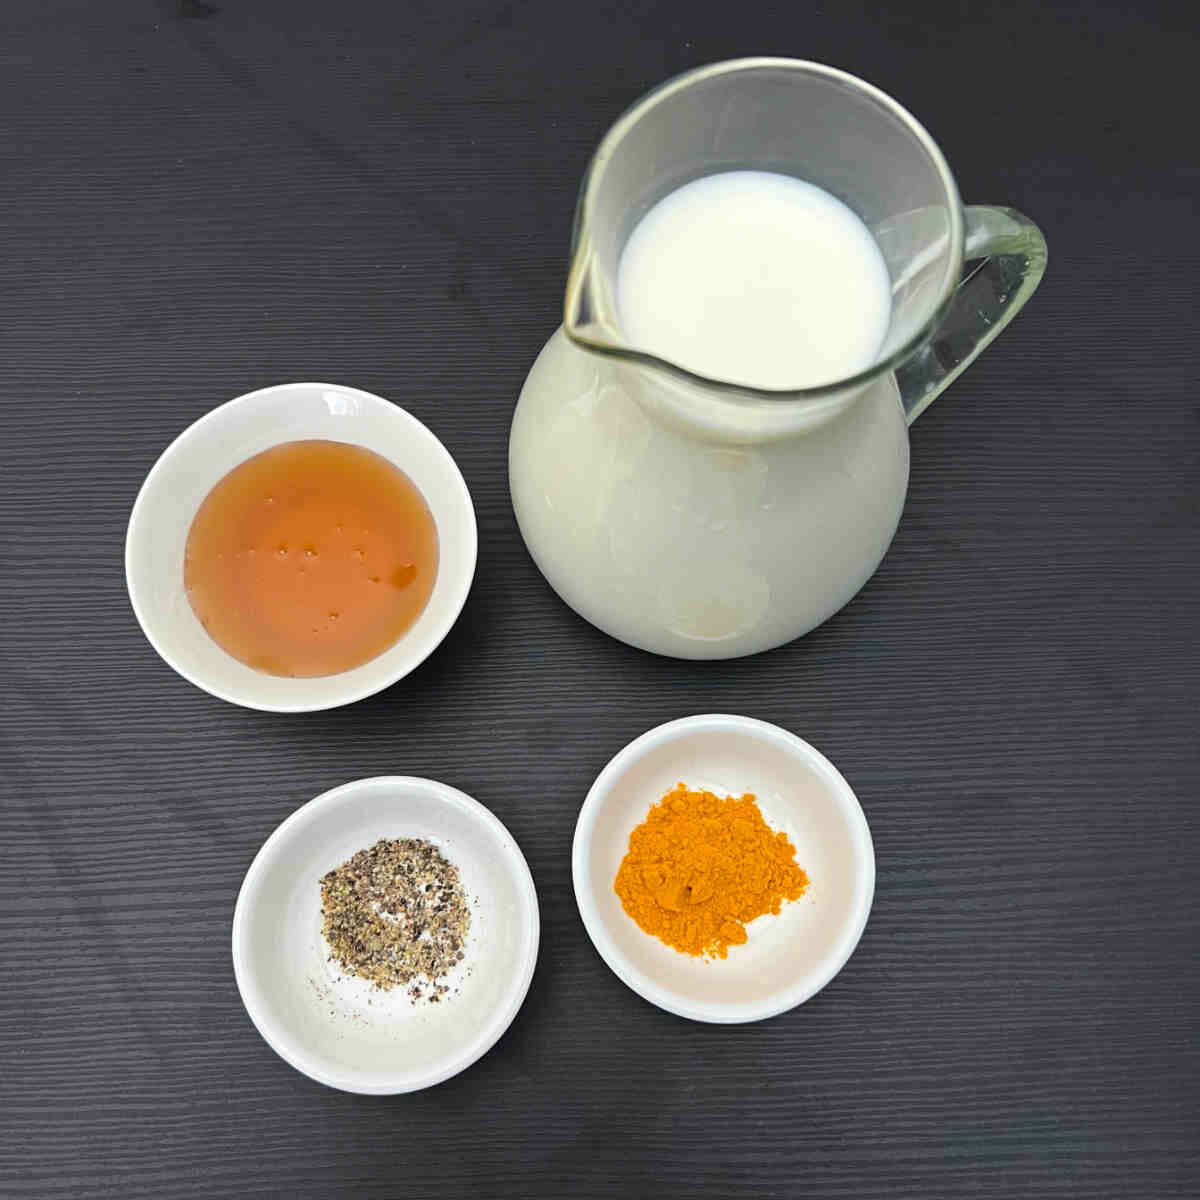 ingredients to make turmeric milk.